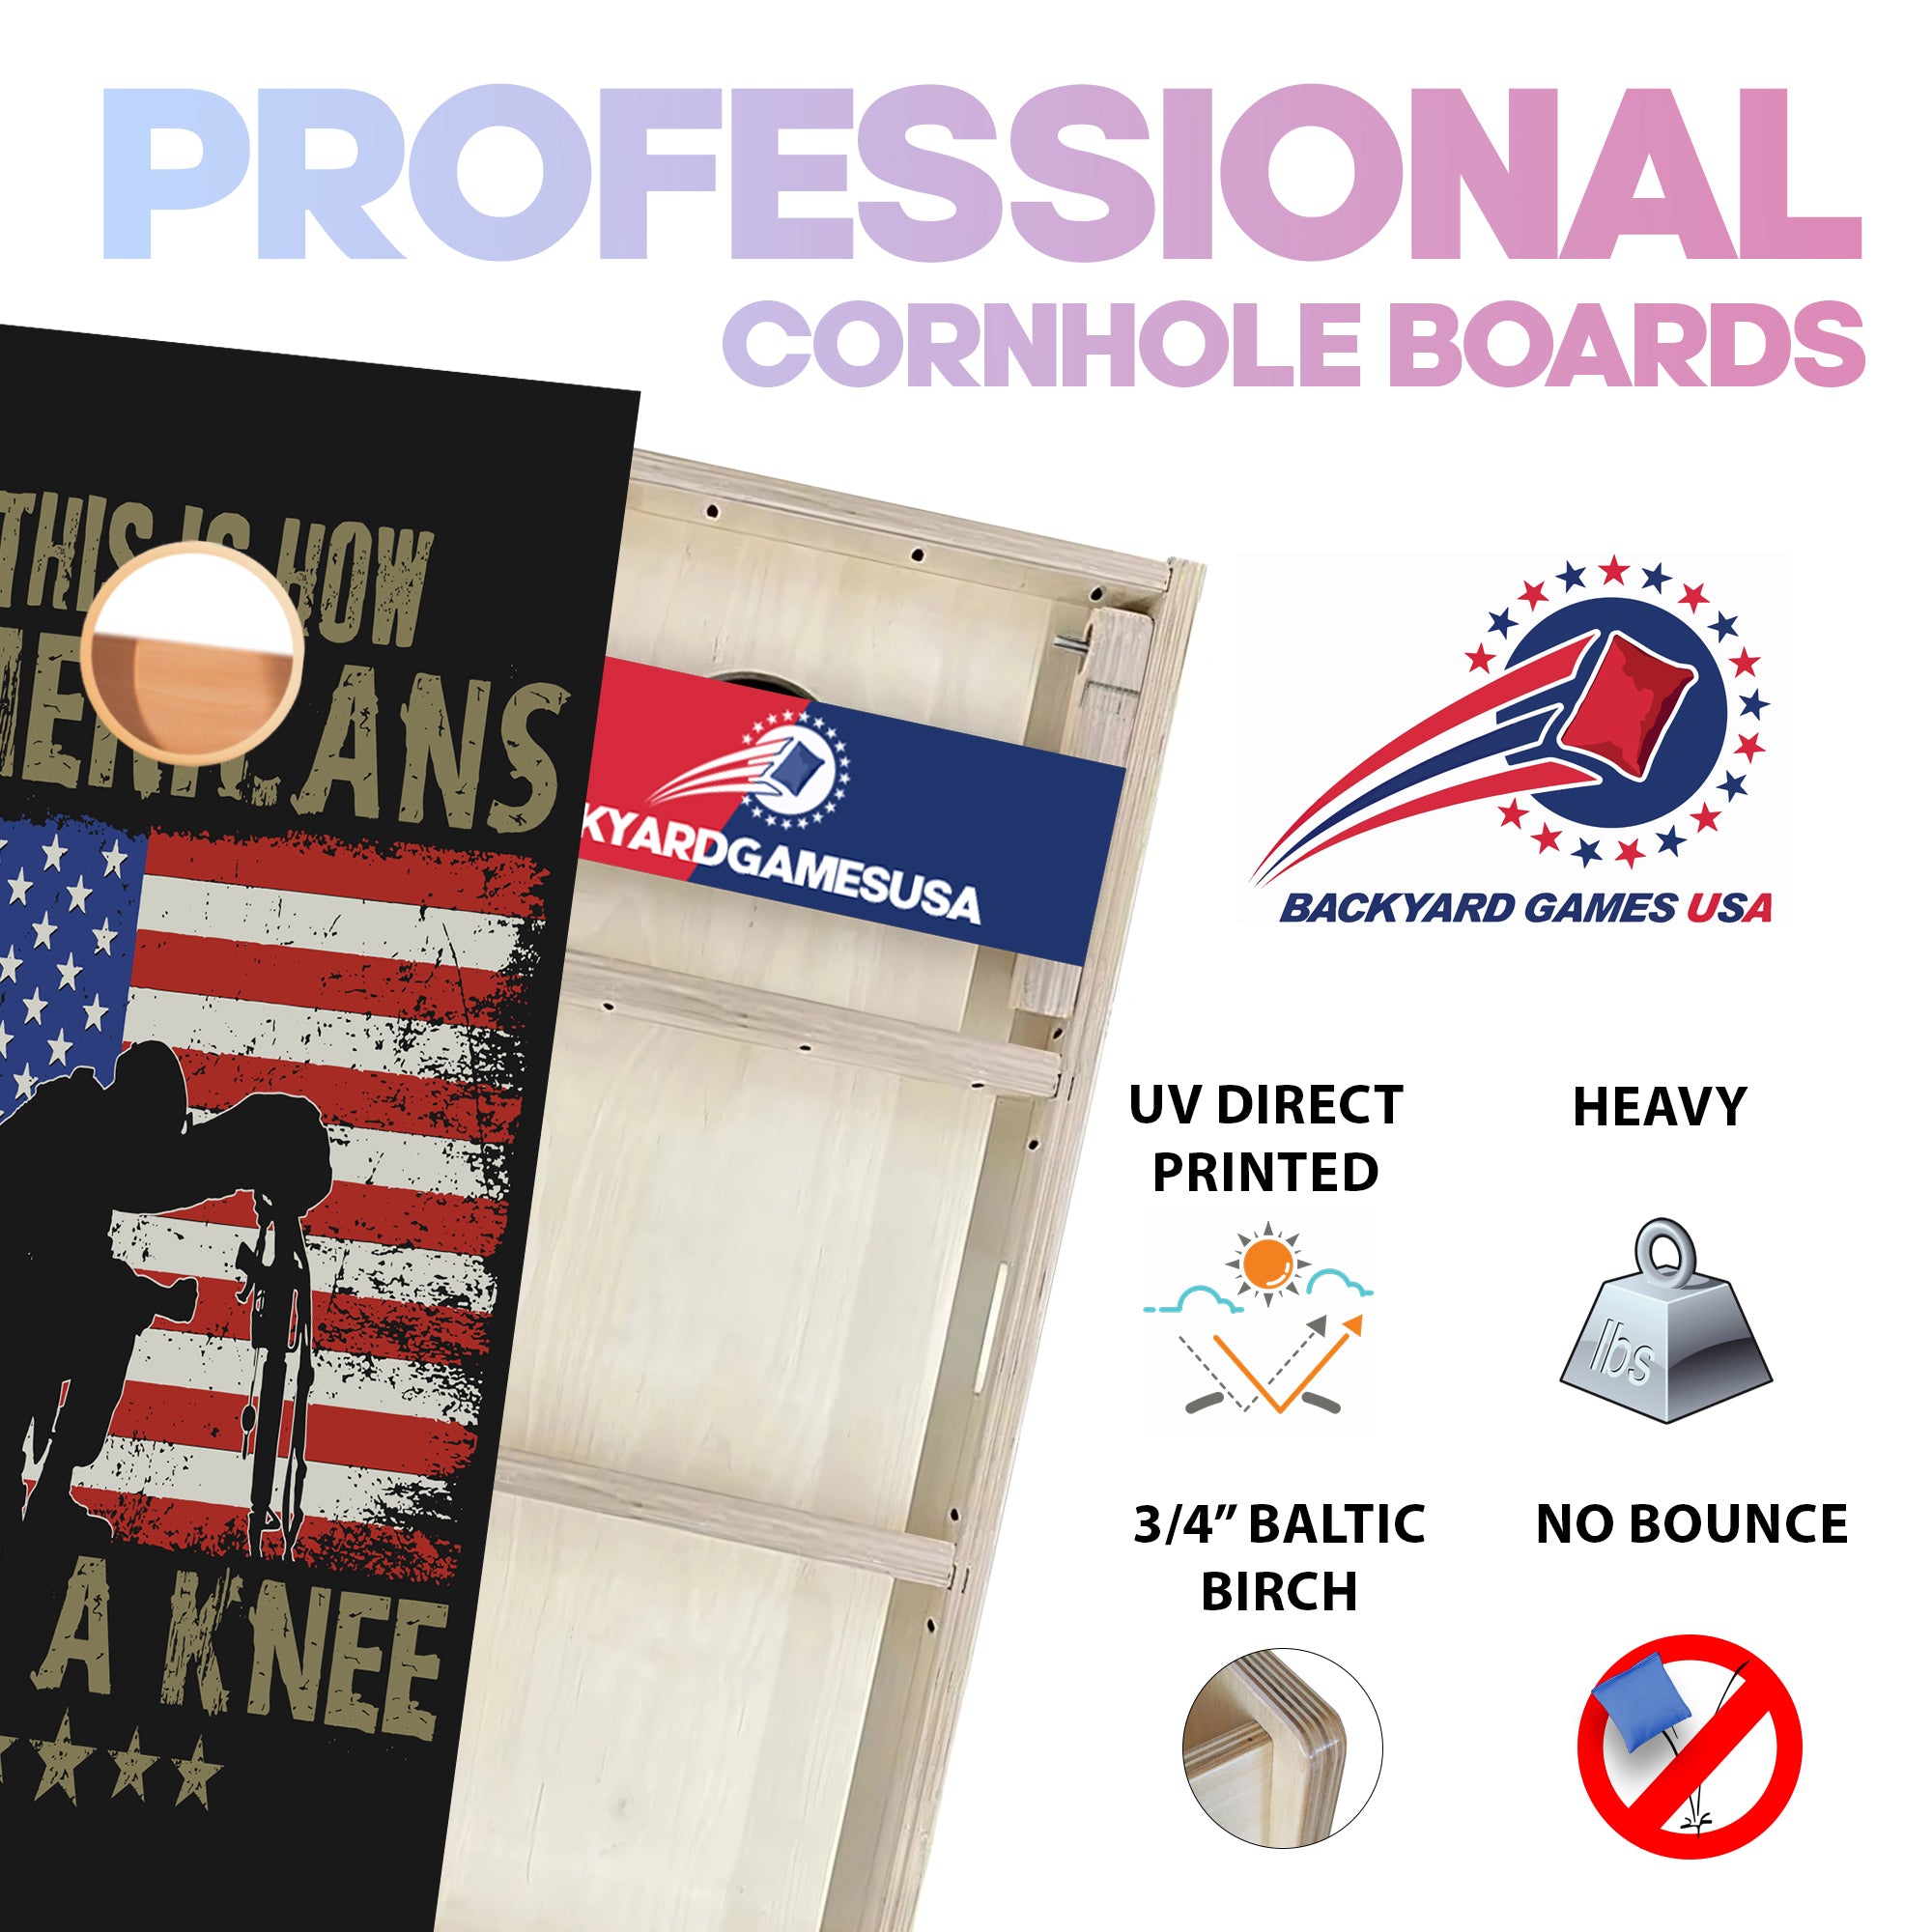 Take A Knee Professional Cornhole Boards